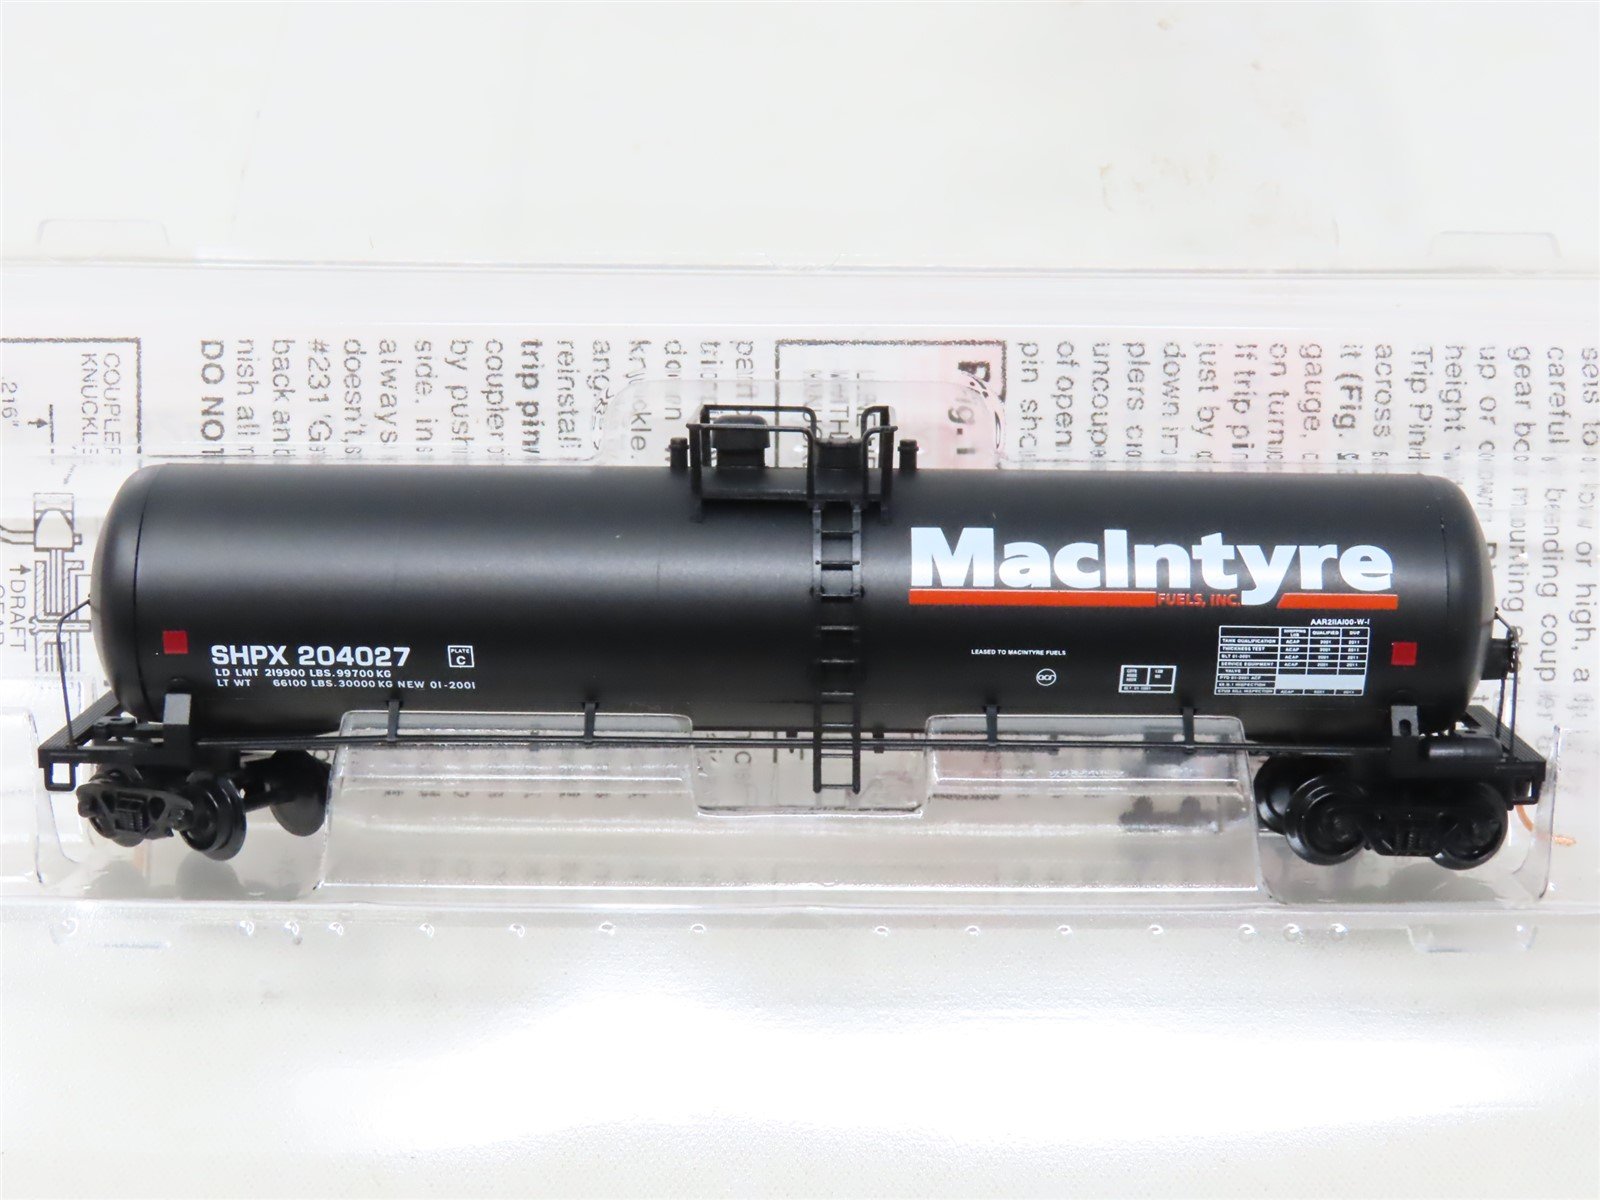 N Scale Micro-Trains MTL 110030 SHPX MacIntyre Fuels 56' Tank Car #204027